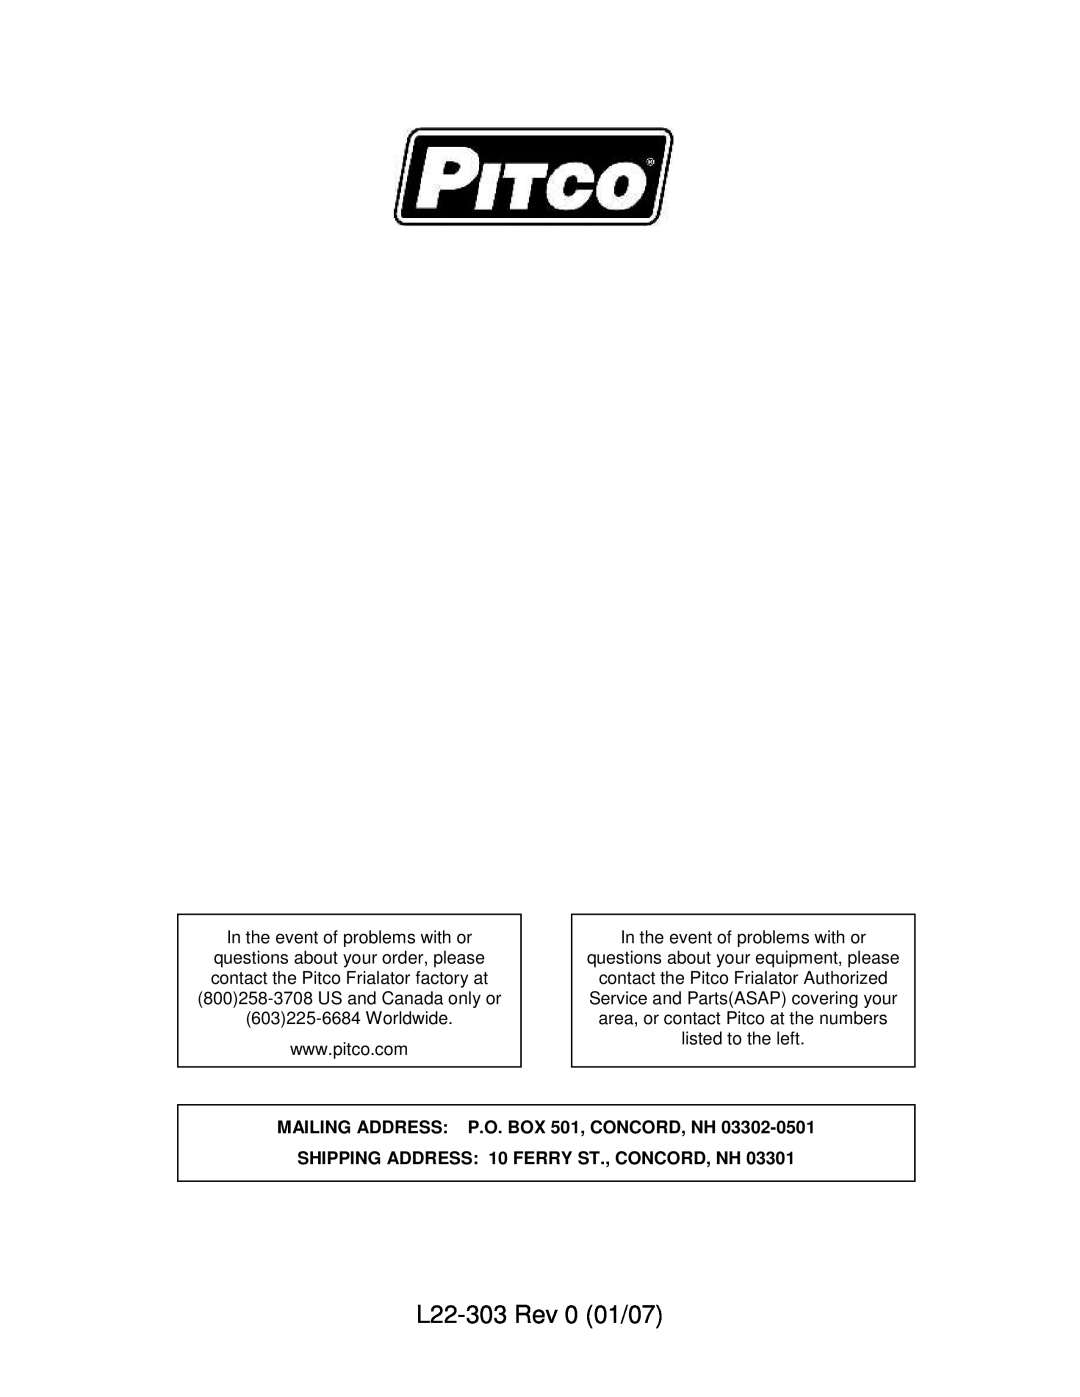 Pitco Frialator service manual L22-303Rev 0 01/07, MAILING ADDRESS P.O. BOX 501, CONCORD, NH 